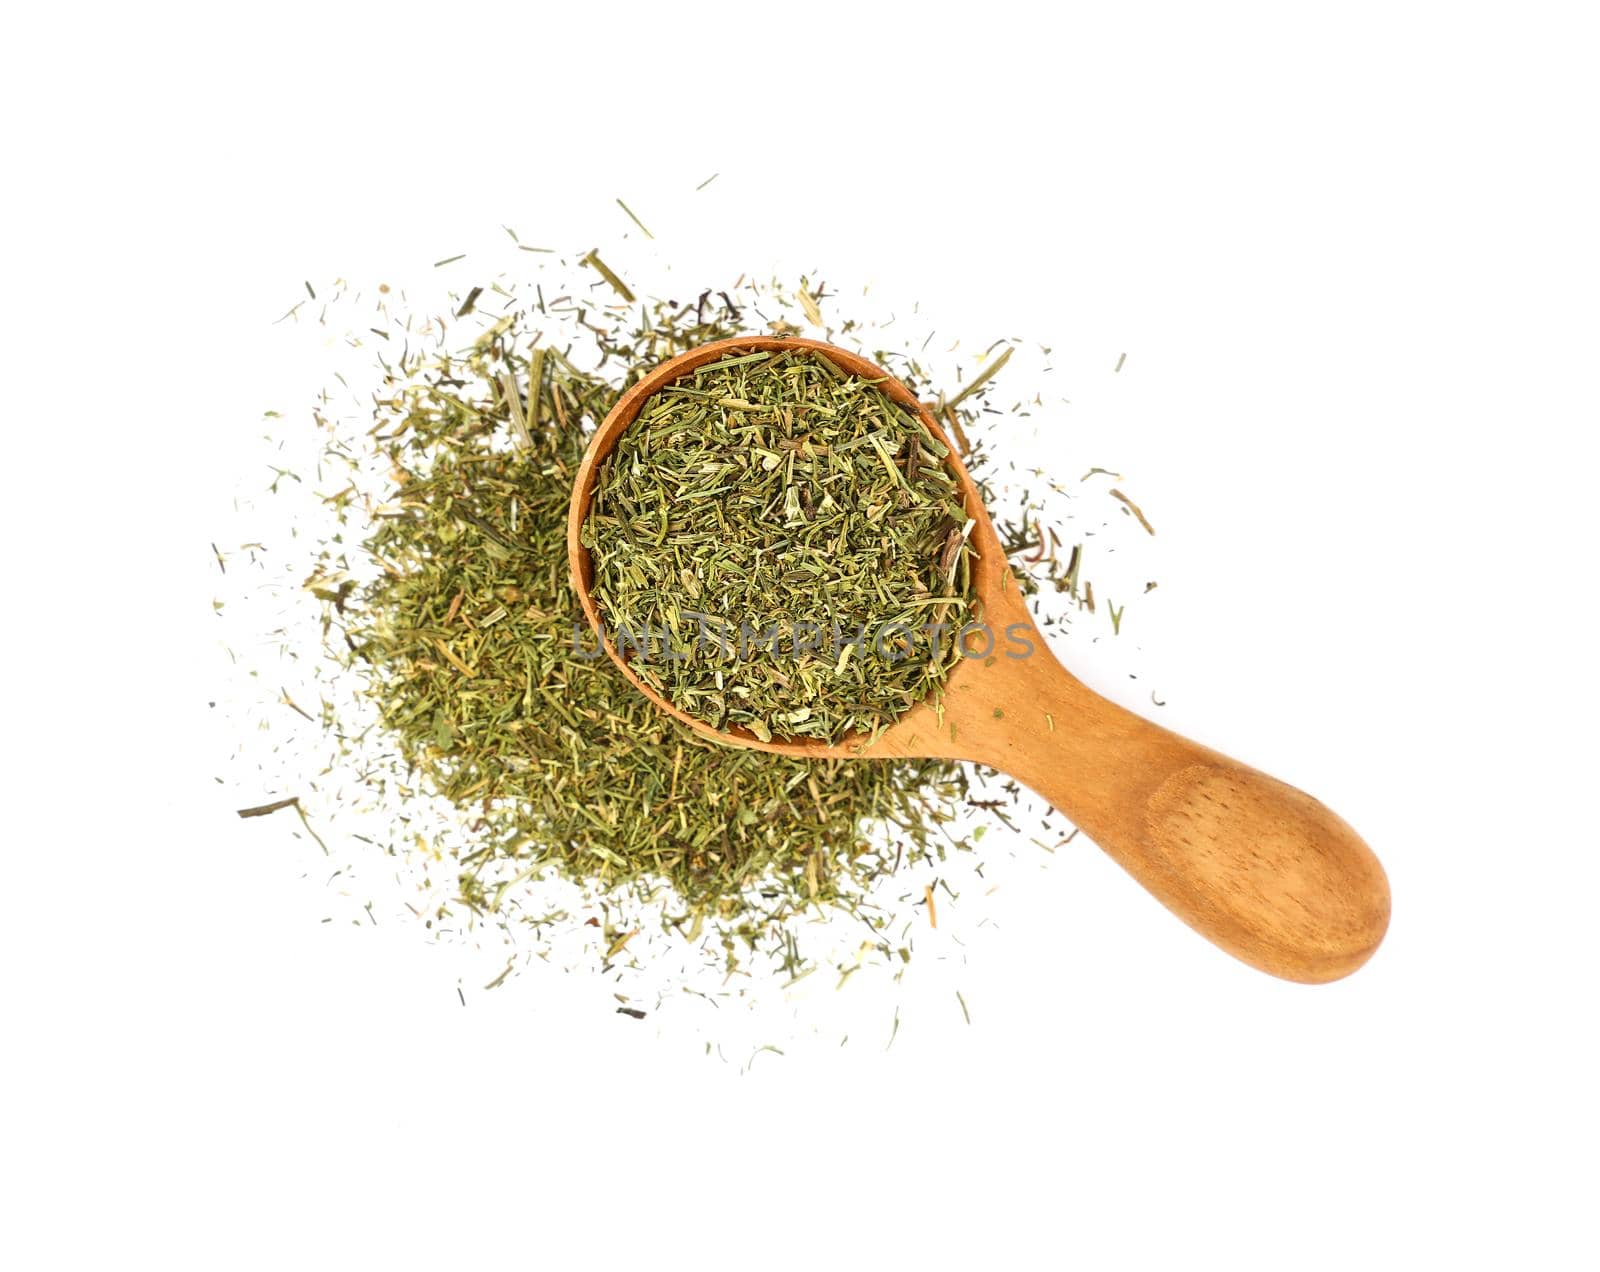 Wooden scoop spoon full of dried herbs spice by BreakingTheWalls